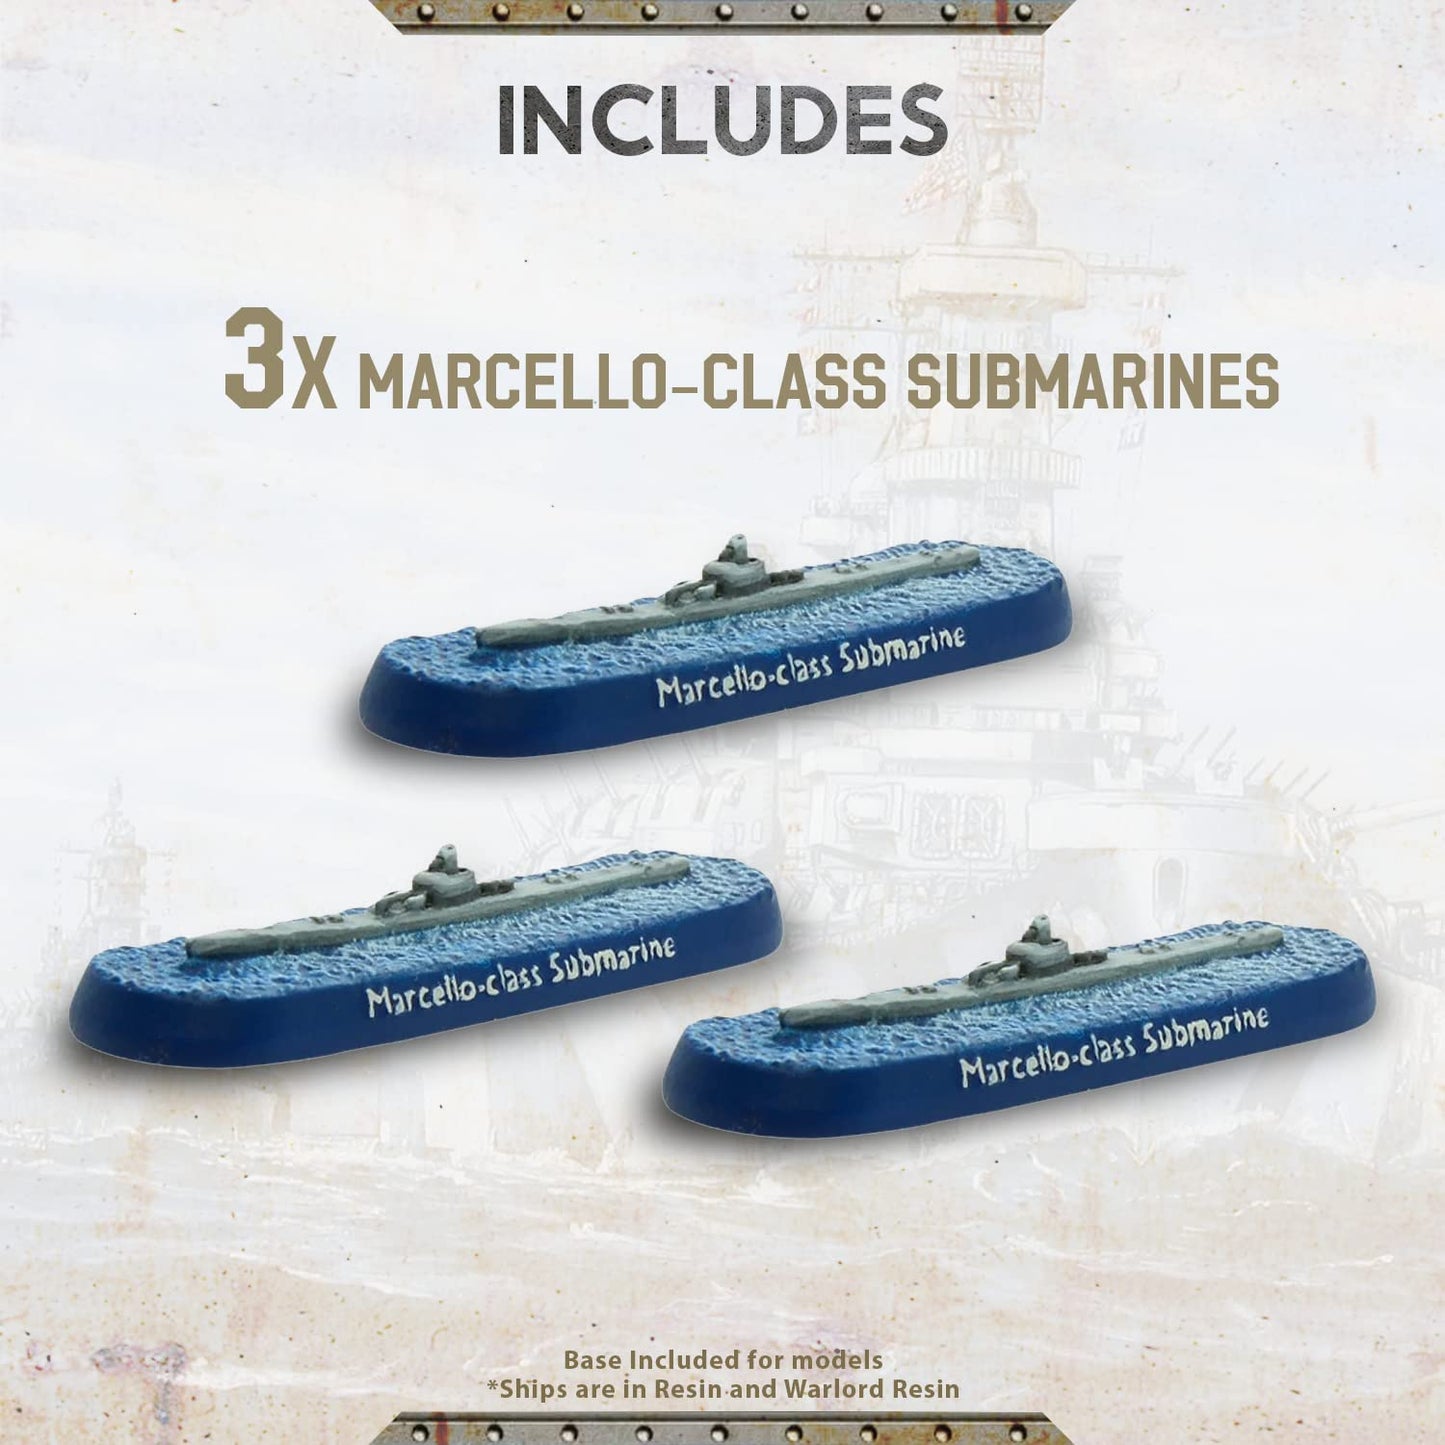 Victory at Sea - Regia Marina: Regia Marina Submarines & MTB Sections